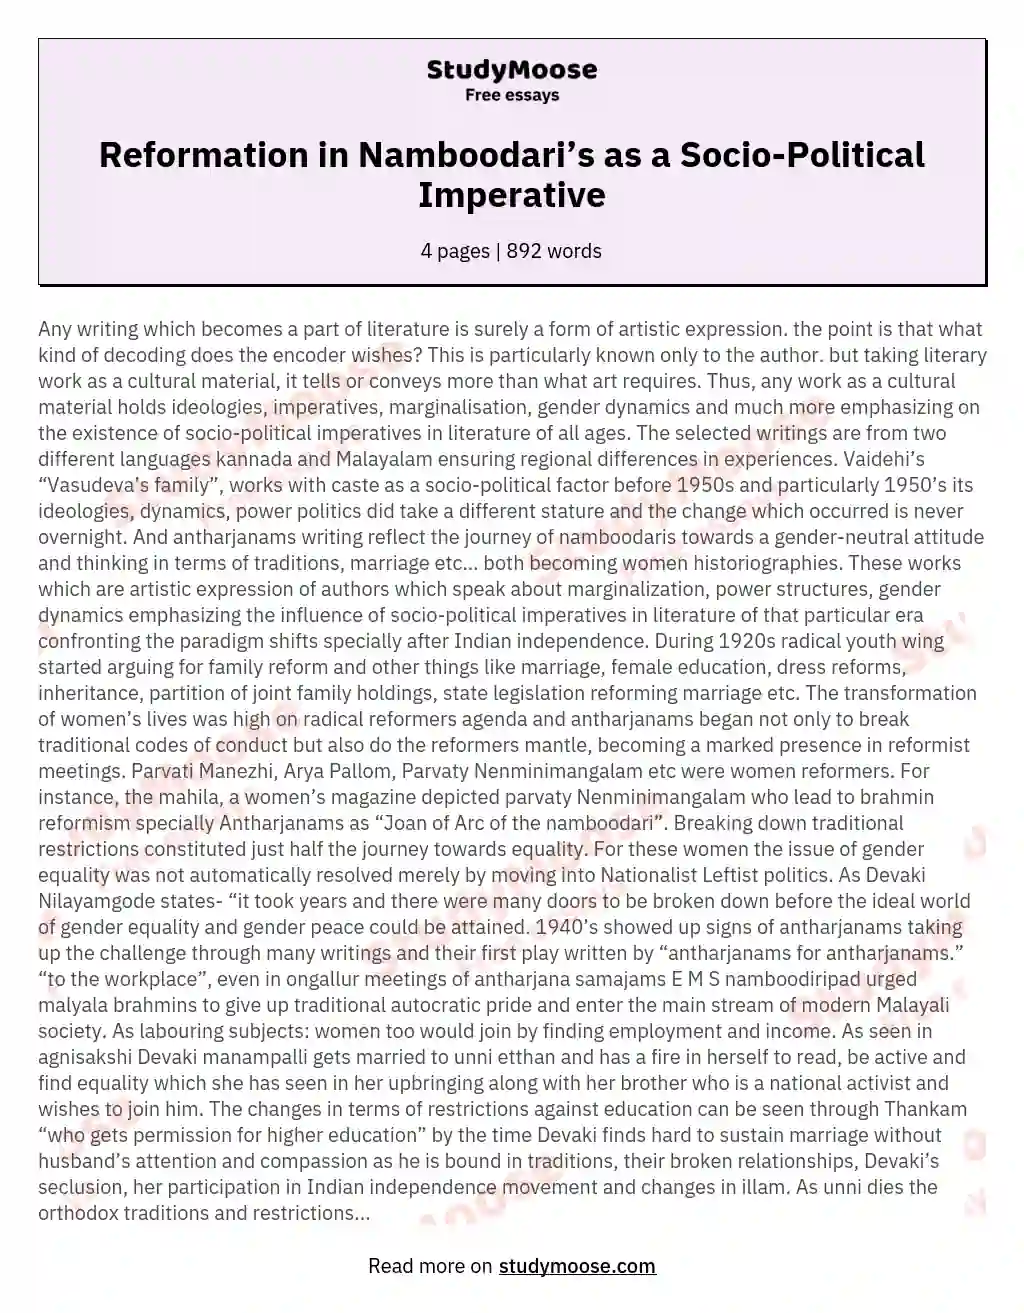 Reformation in Namboodari’s as a Socio-Political Imperative essay